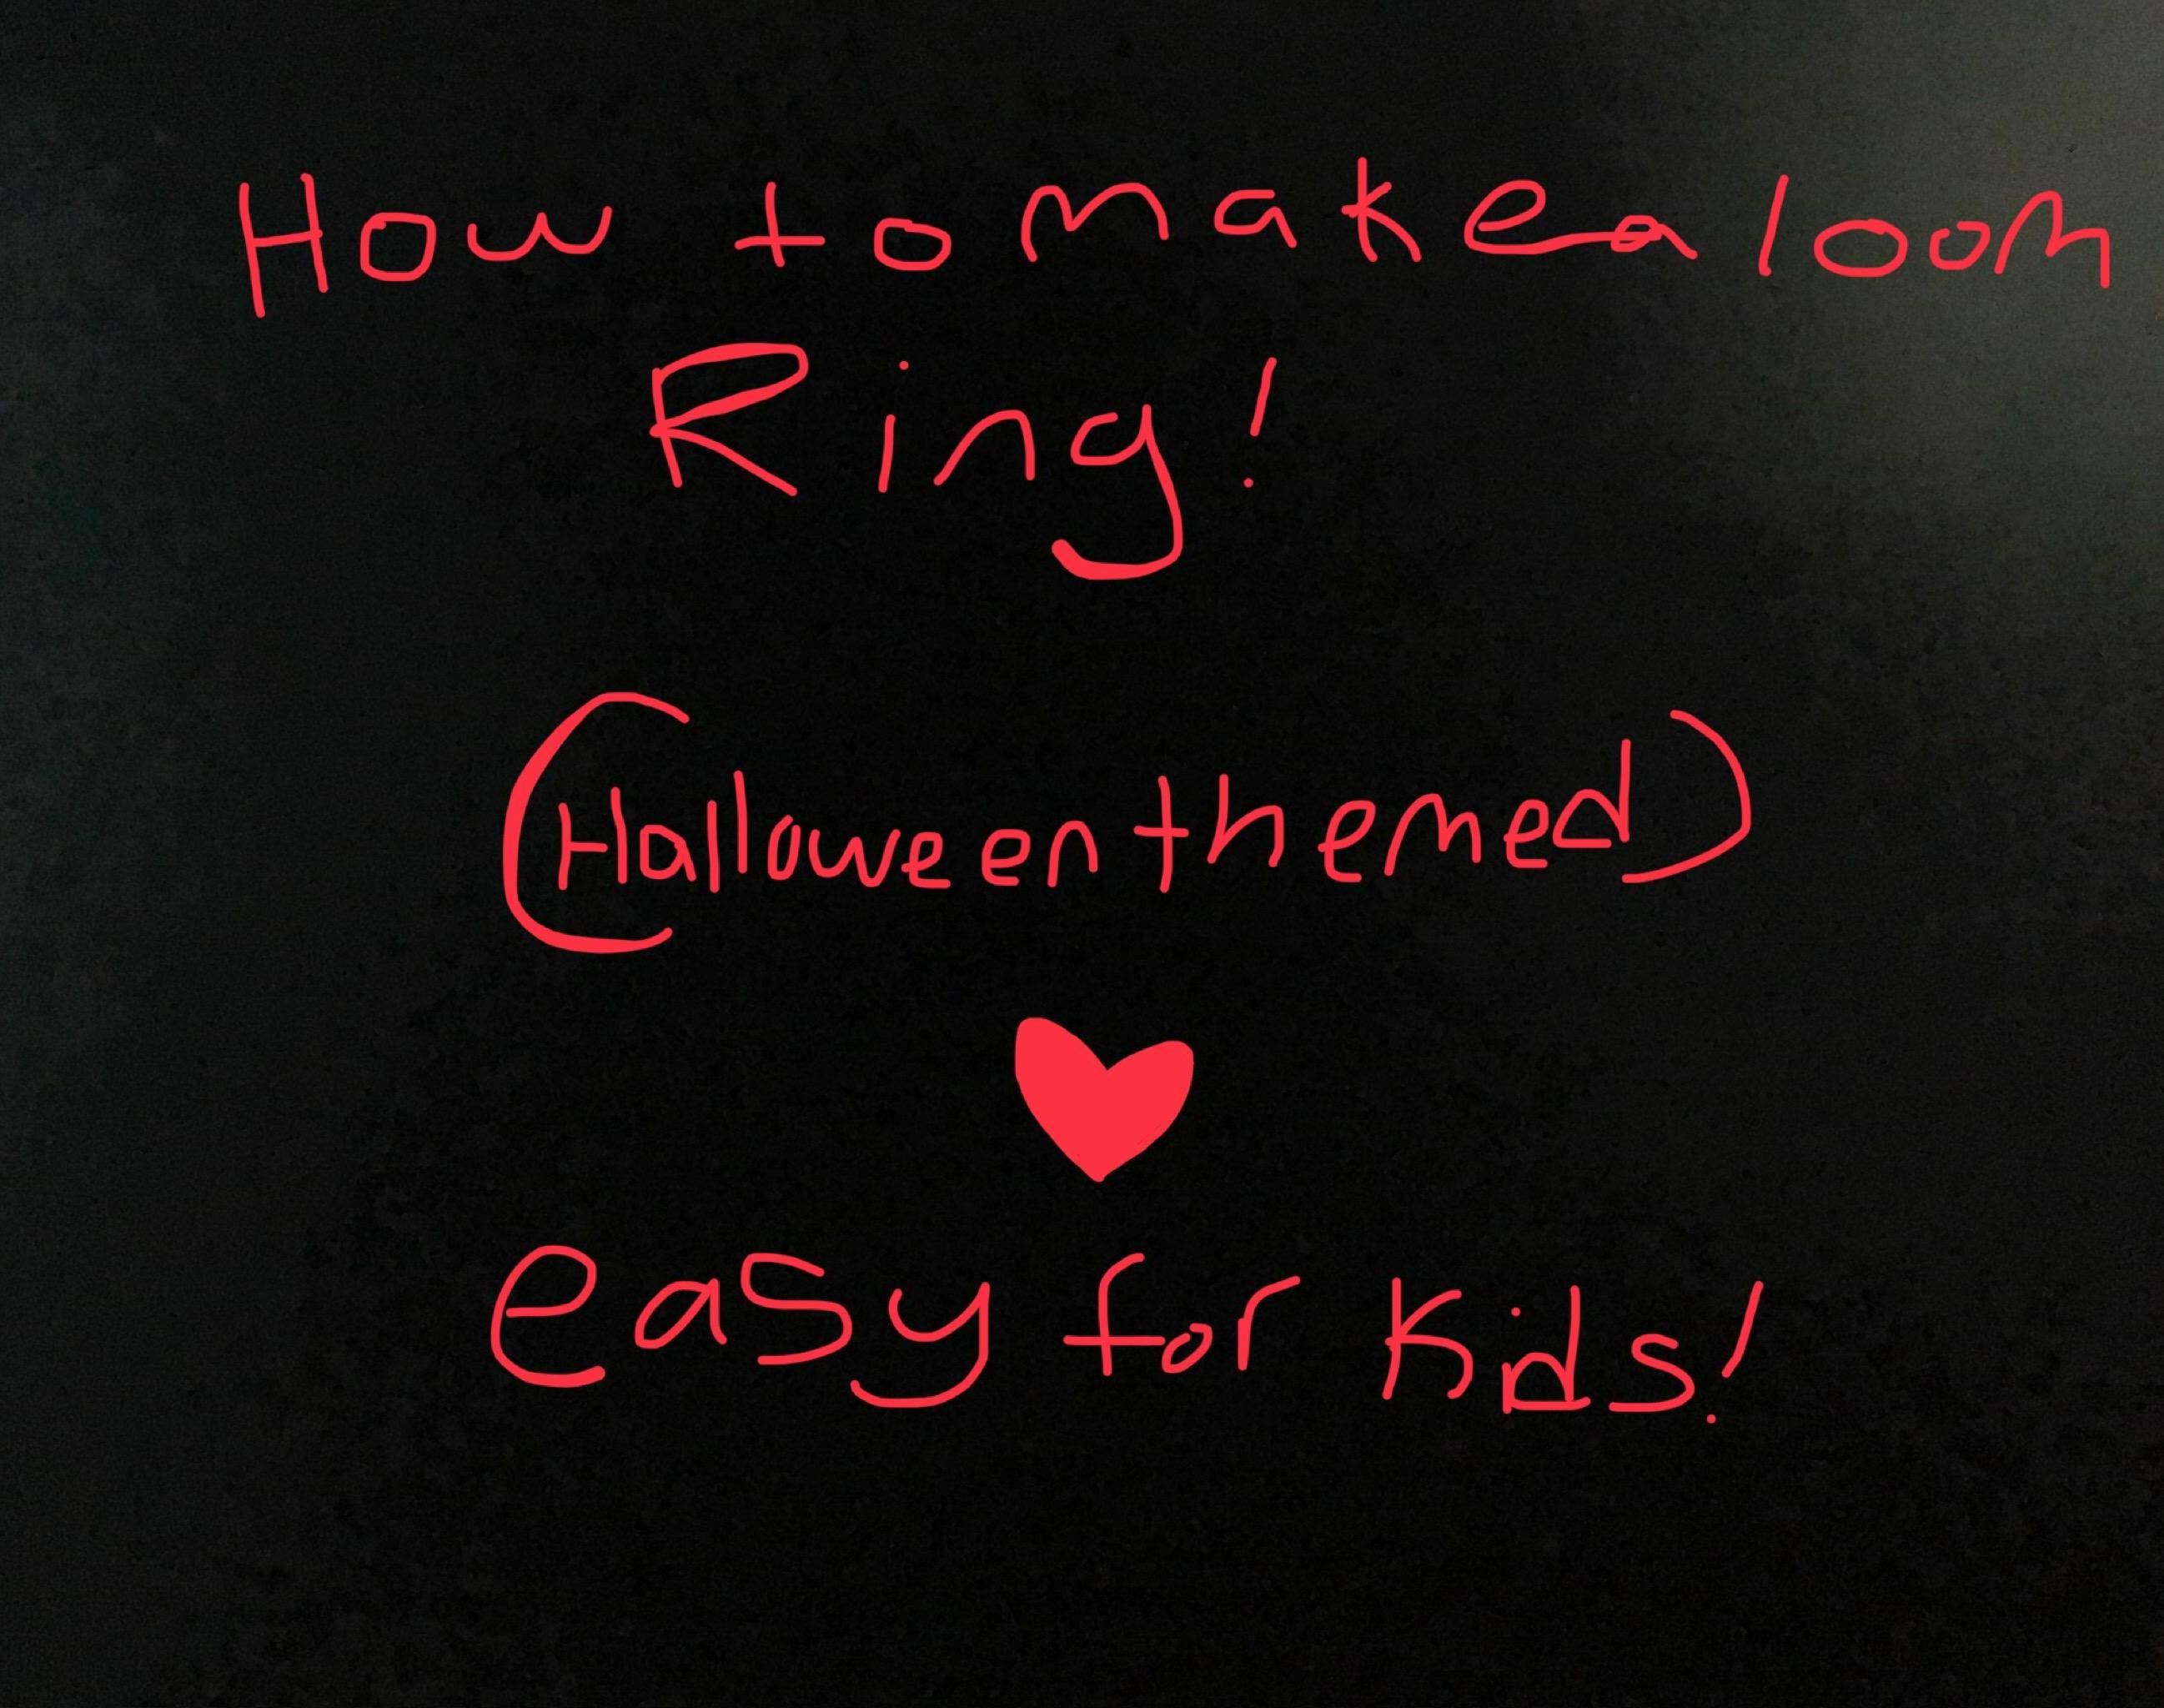 Halloween Themed Loom Ring